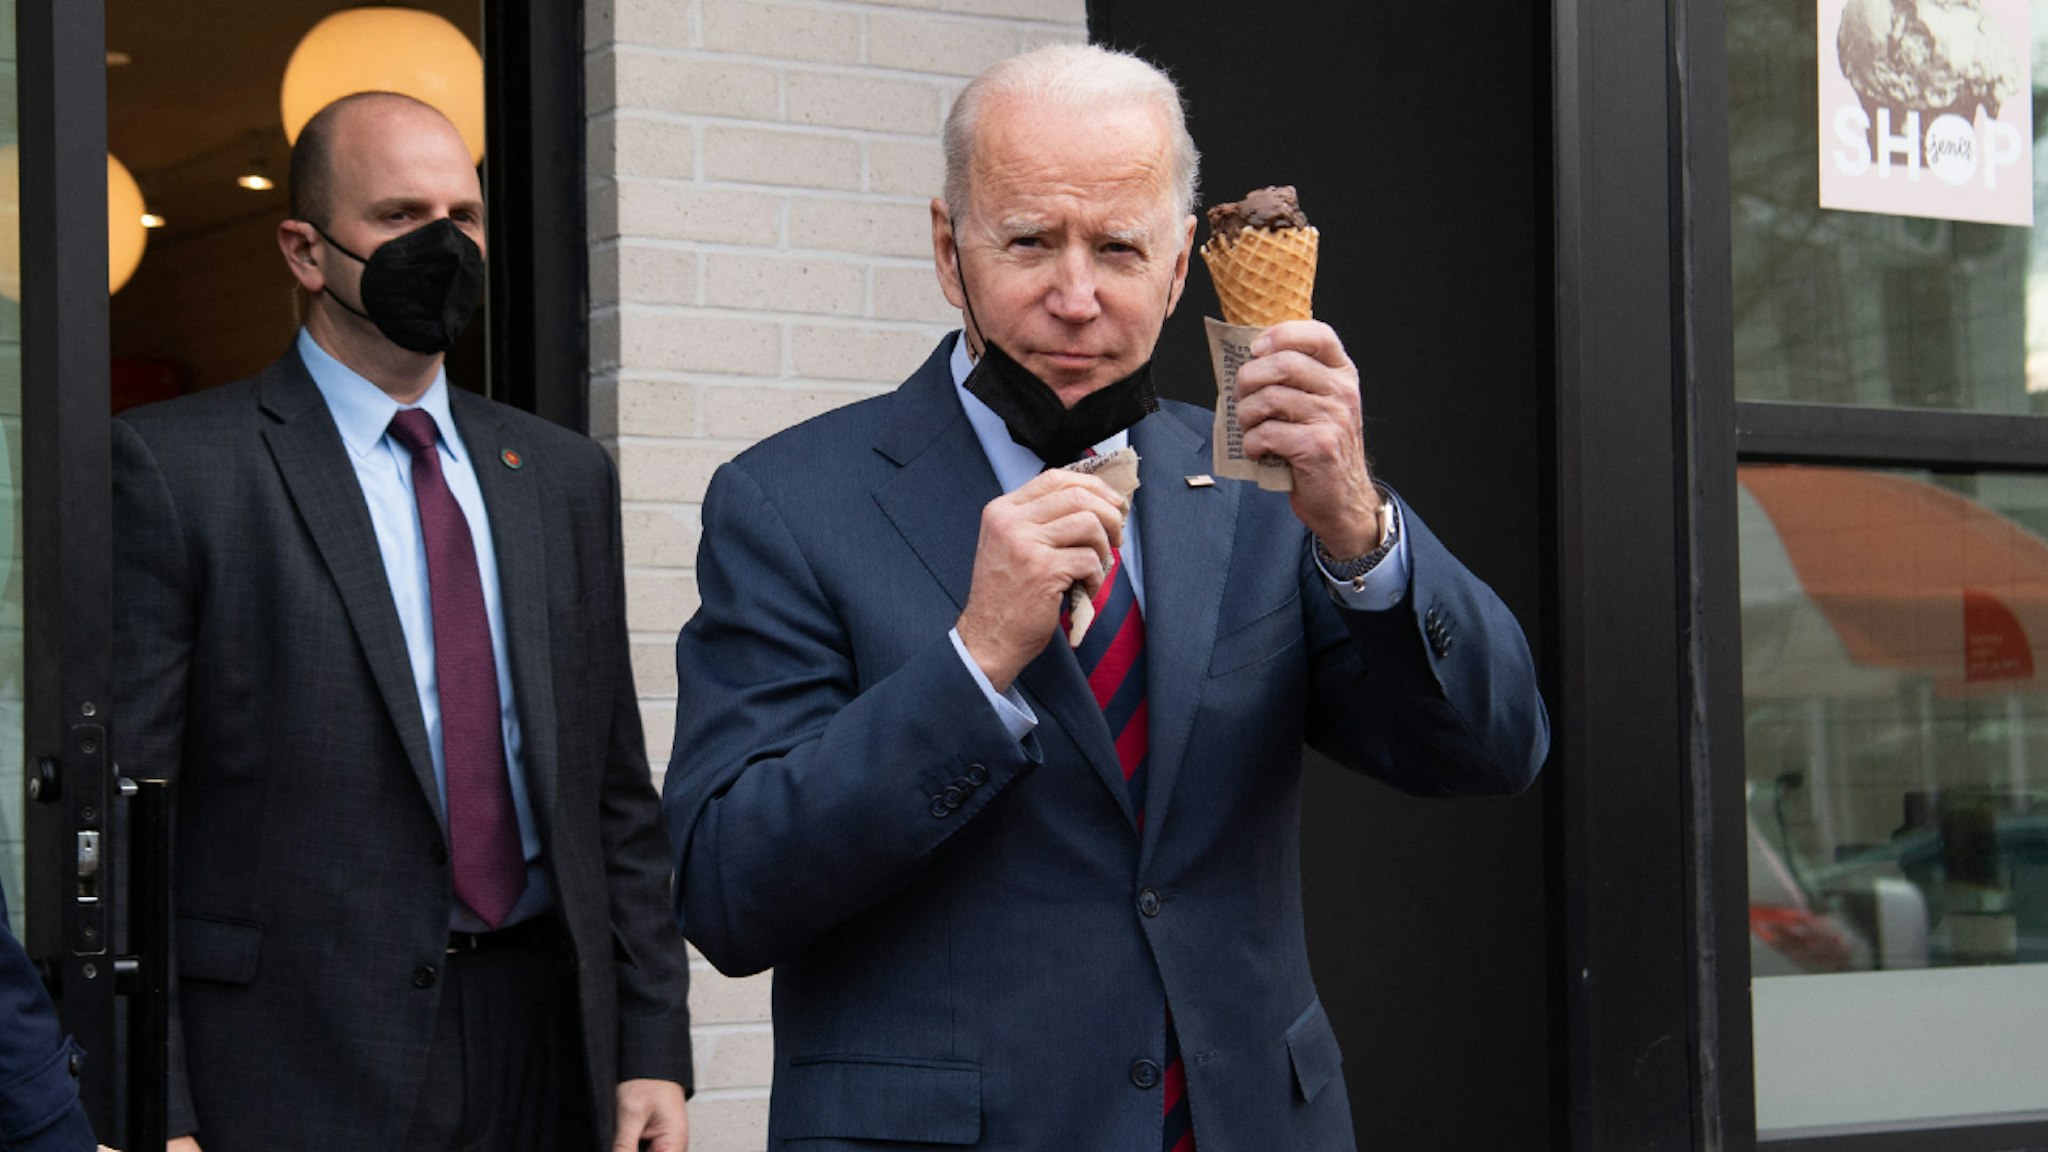 US President Joe Biden carries an ice cream cone as he leaves Jeni's Ice Cream in Washington, DC, on January 25, 2022.